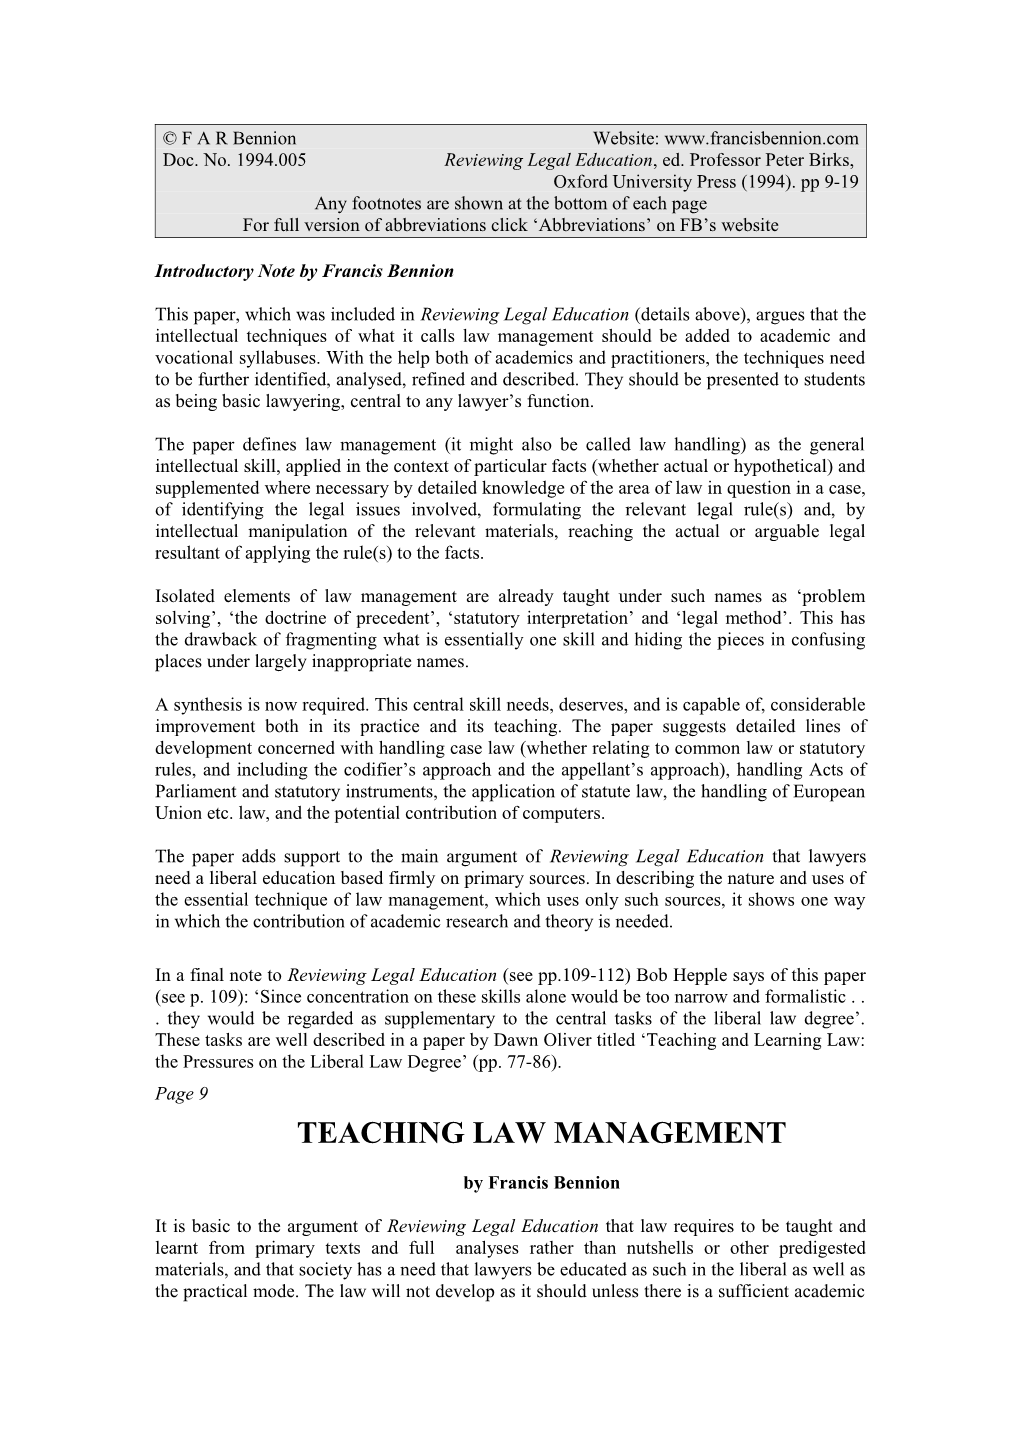 Doc. No. 1994.005 Reviewing Legal Education, Ed. Professor Peter Birks